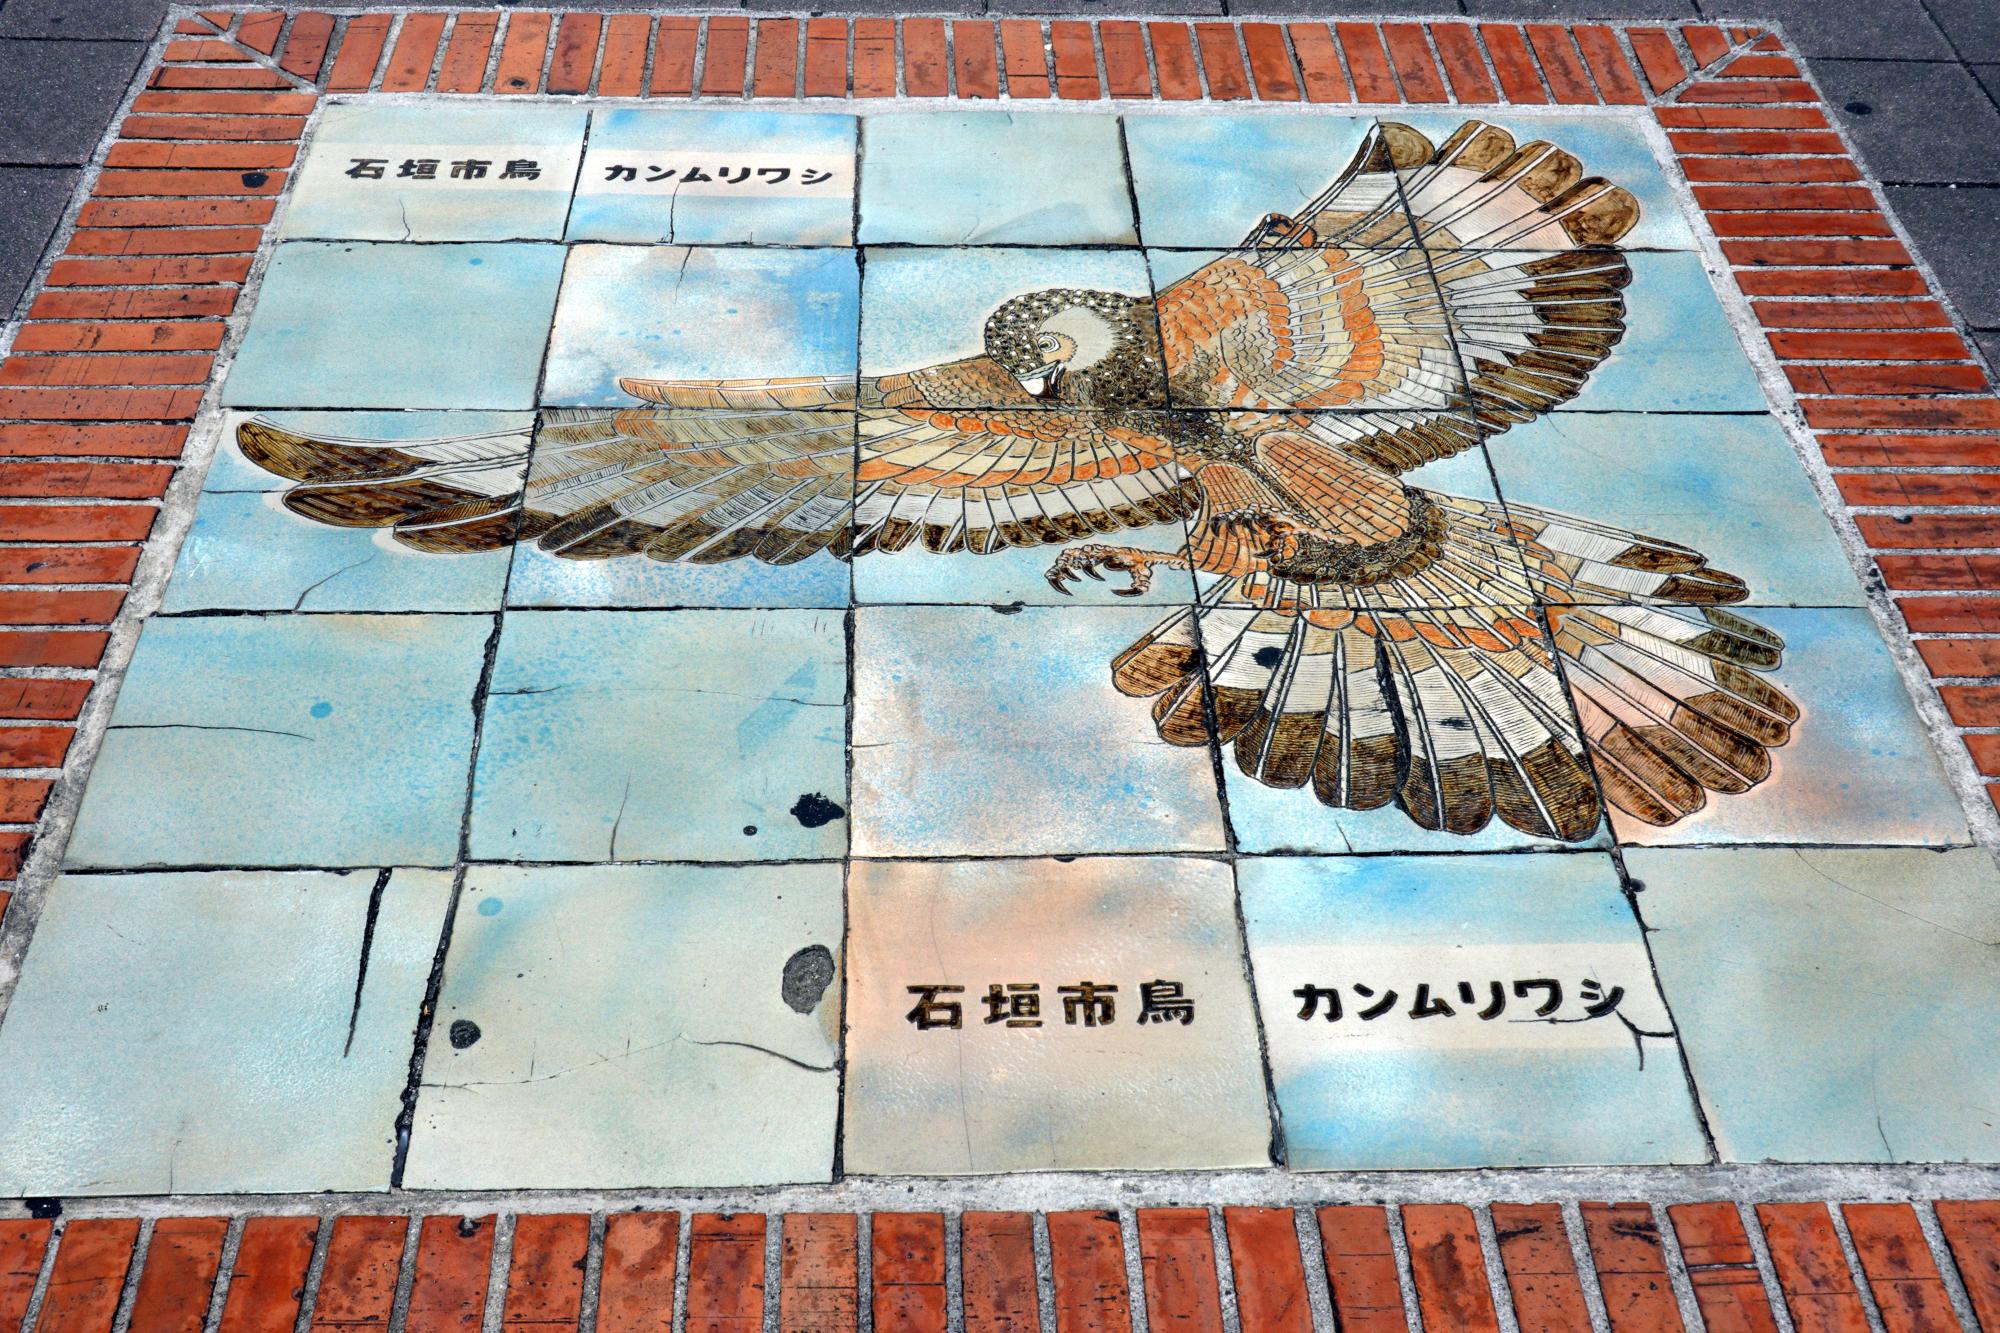 Japan (2019) - Sidewalk Tile Art